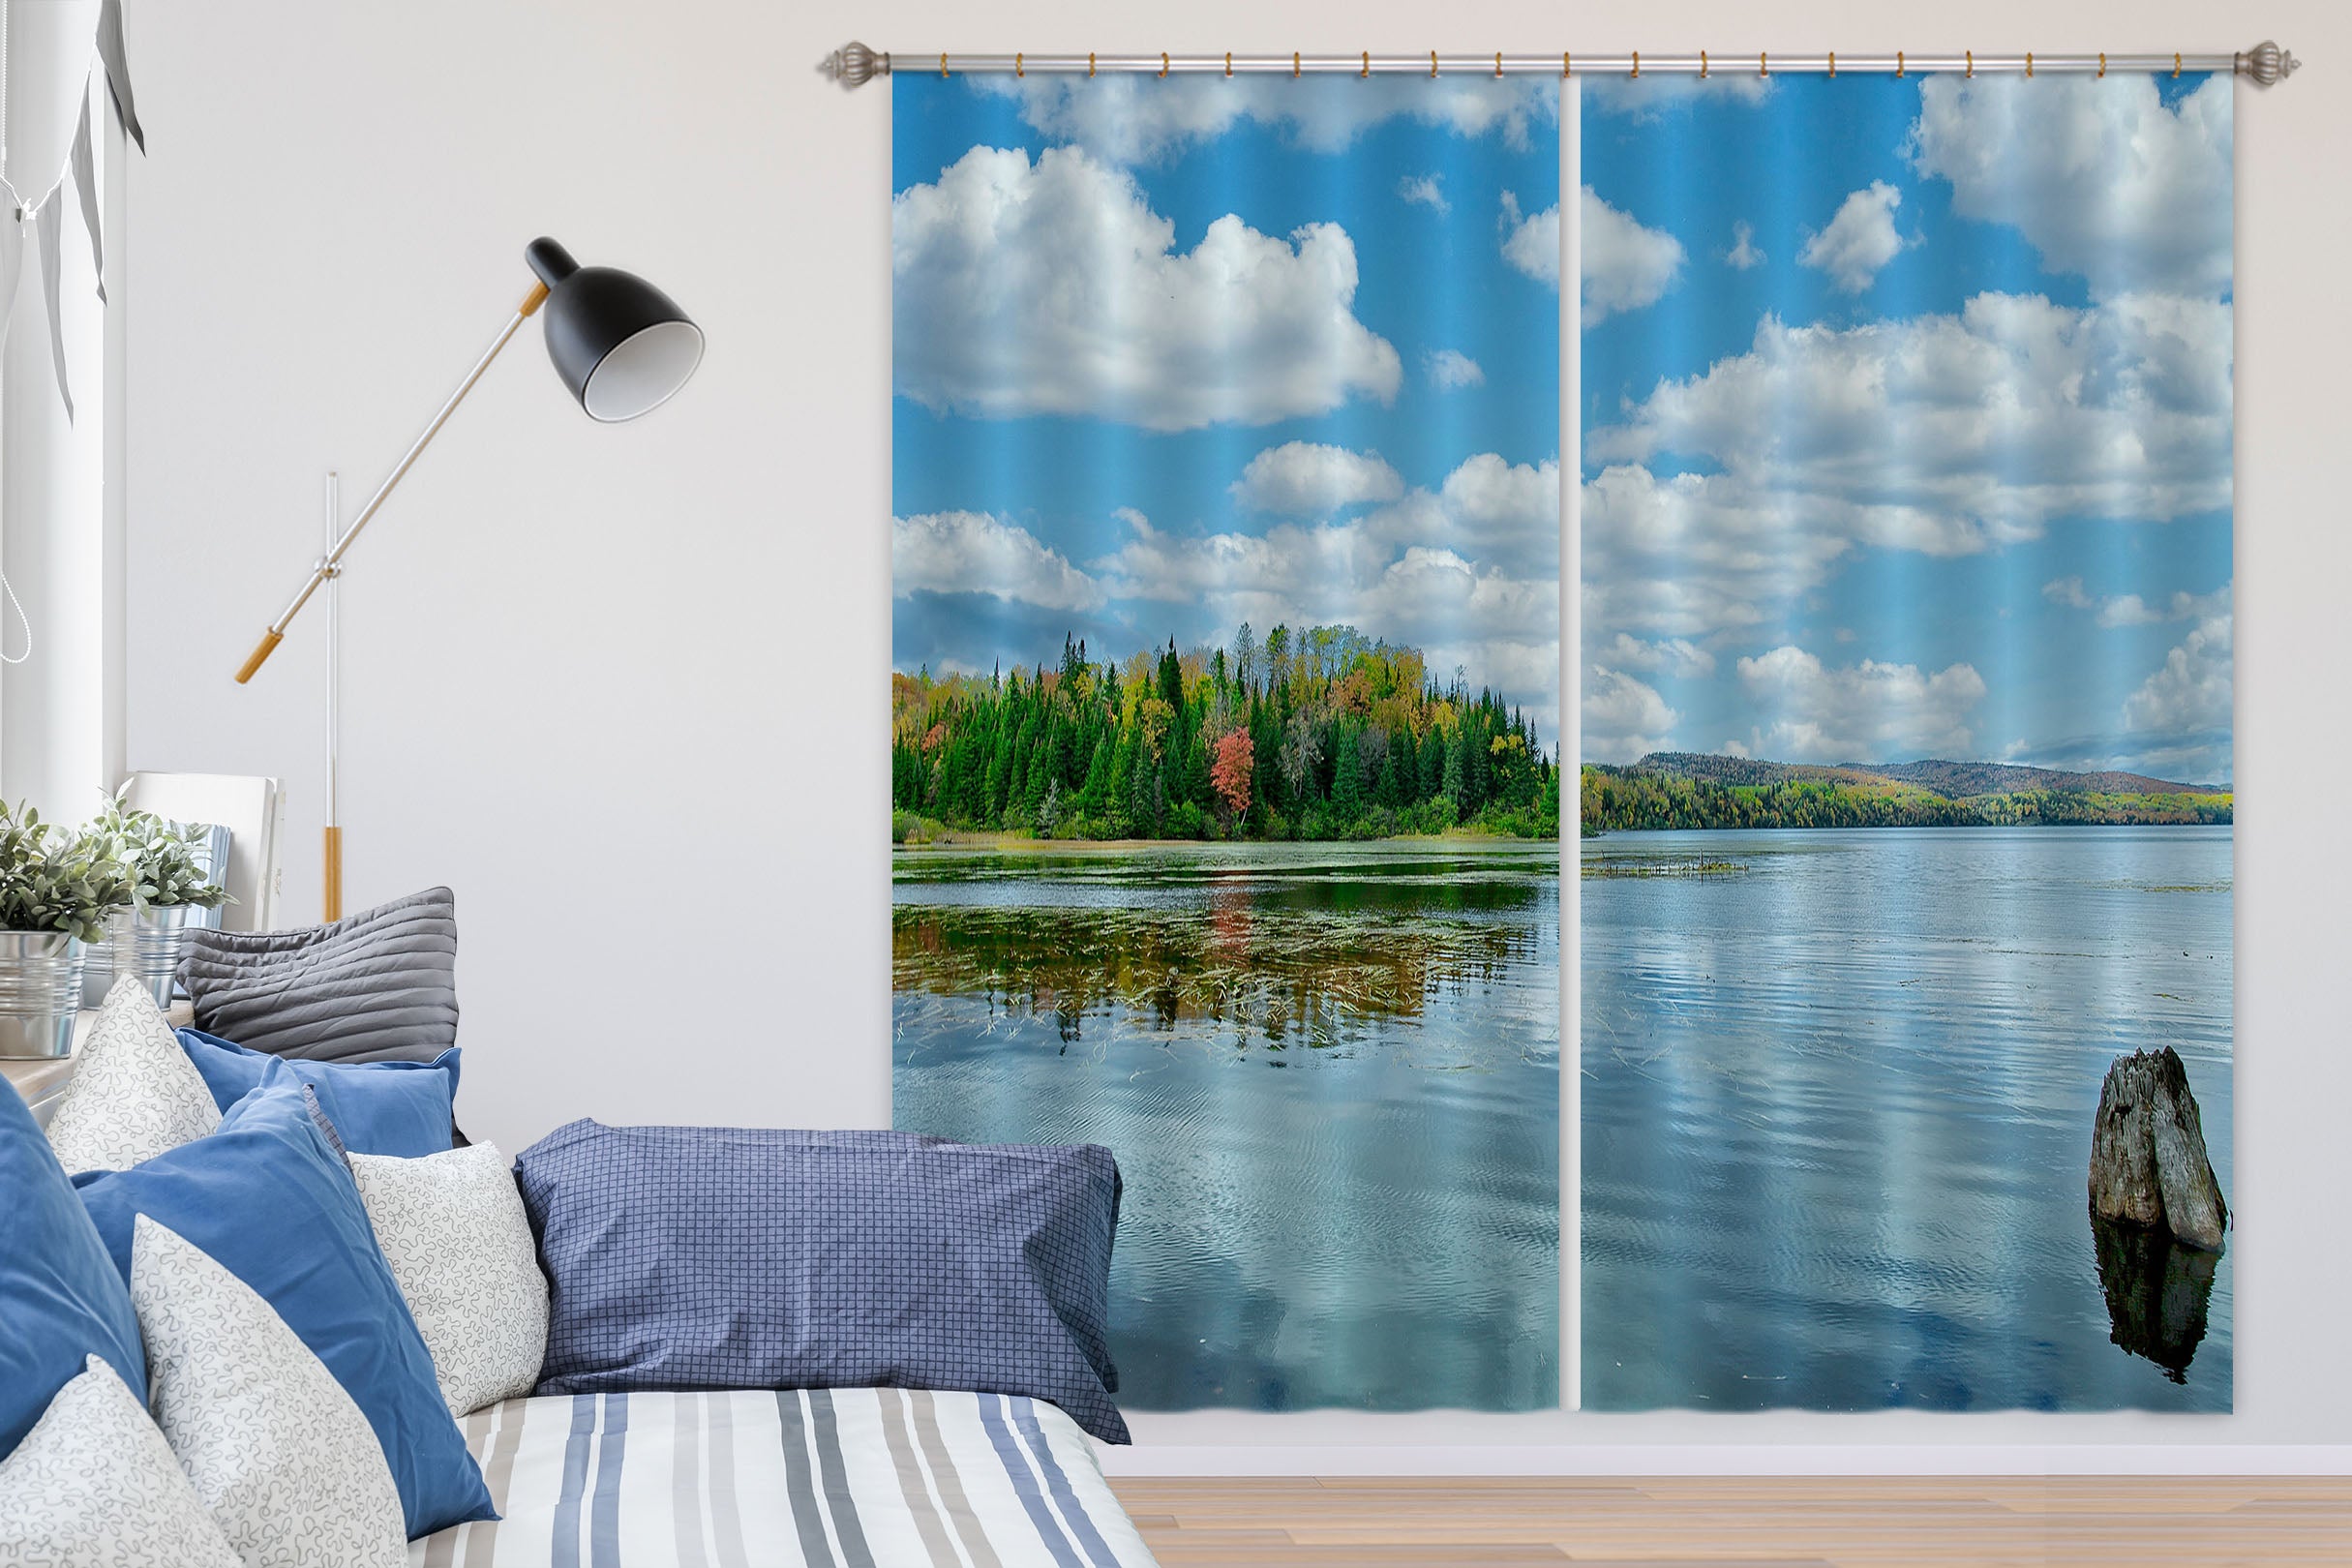 3D Lake 62153 Kathy Barefield Curtain Curtains Drapes